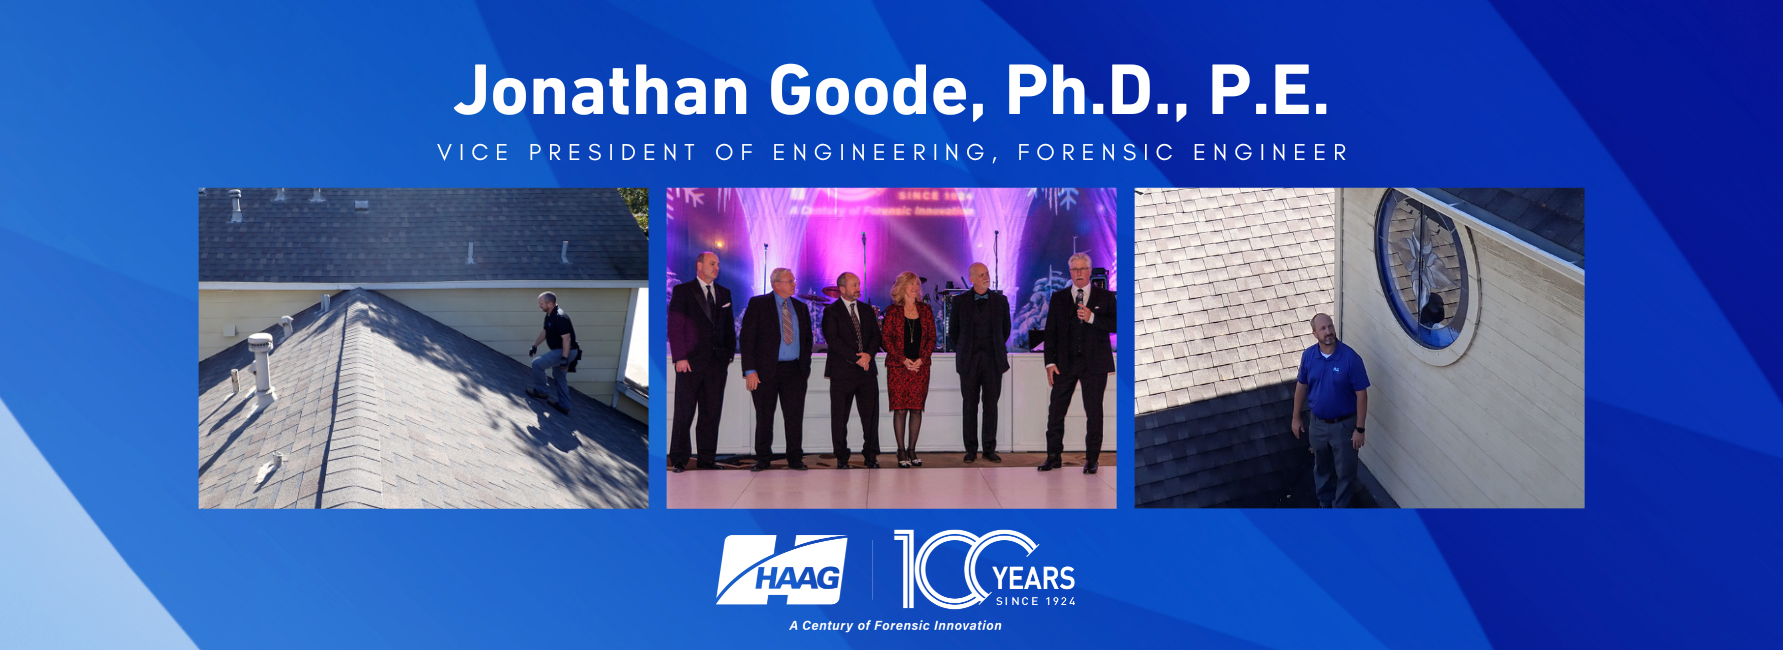 Jonathan Goode, Ph.D., P.E. - VP of Engineering